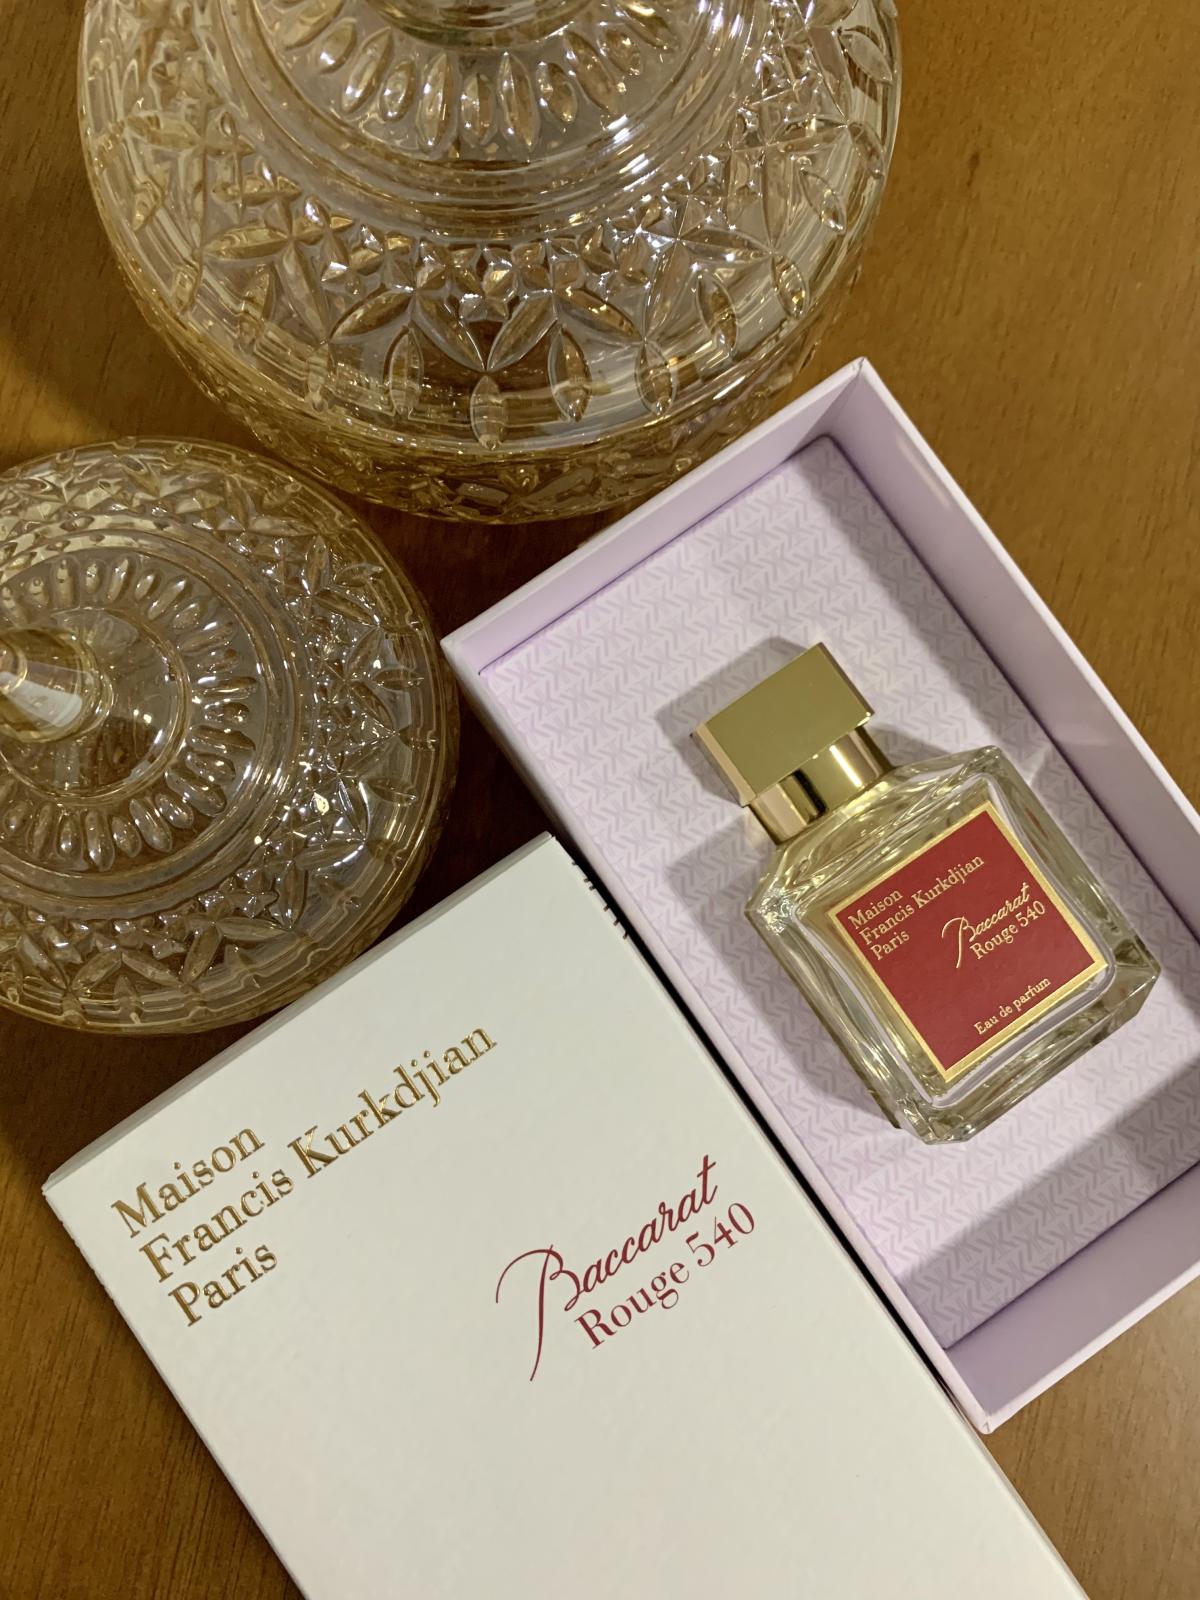 Baccarat Rouge 540 Maison Francis Kurkdjian perfume - a fragrance for ...